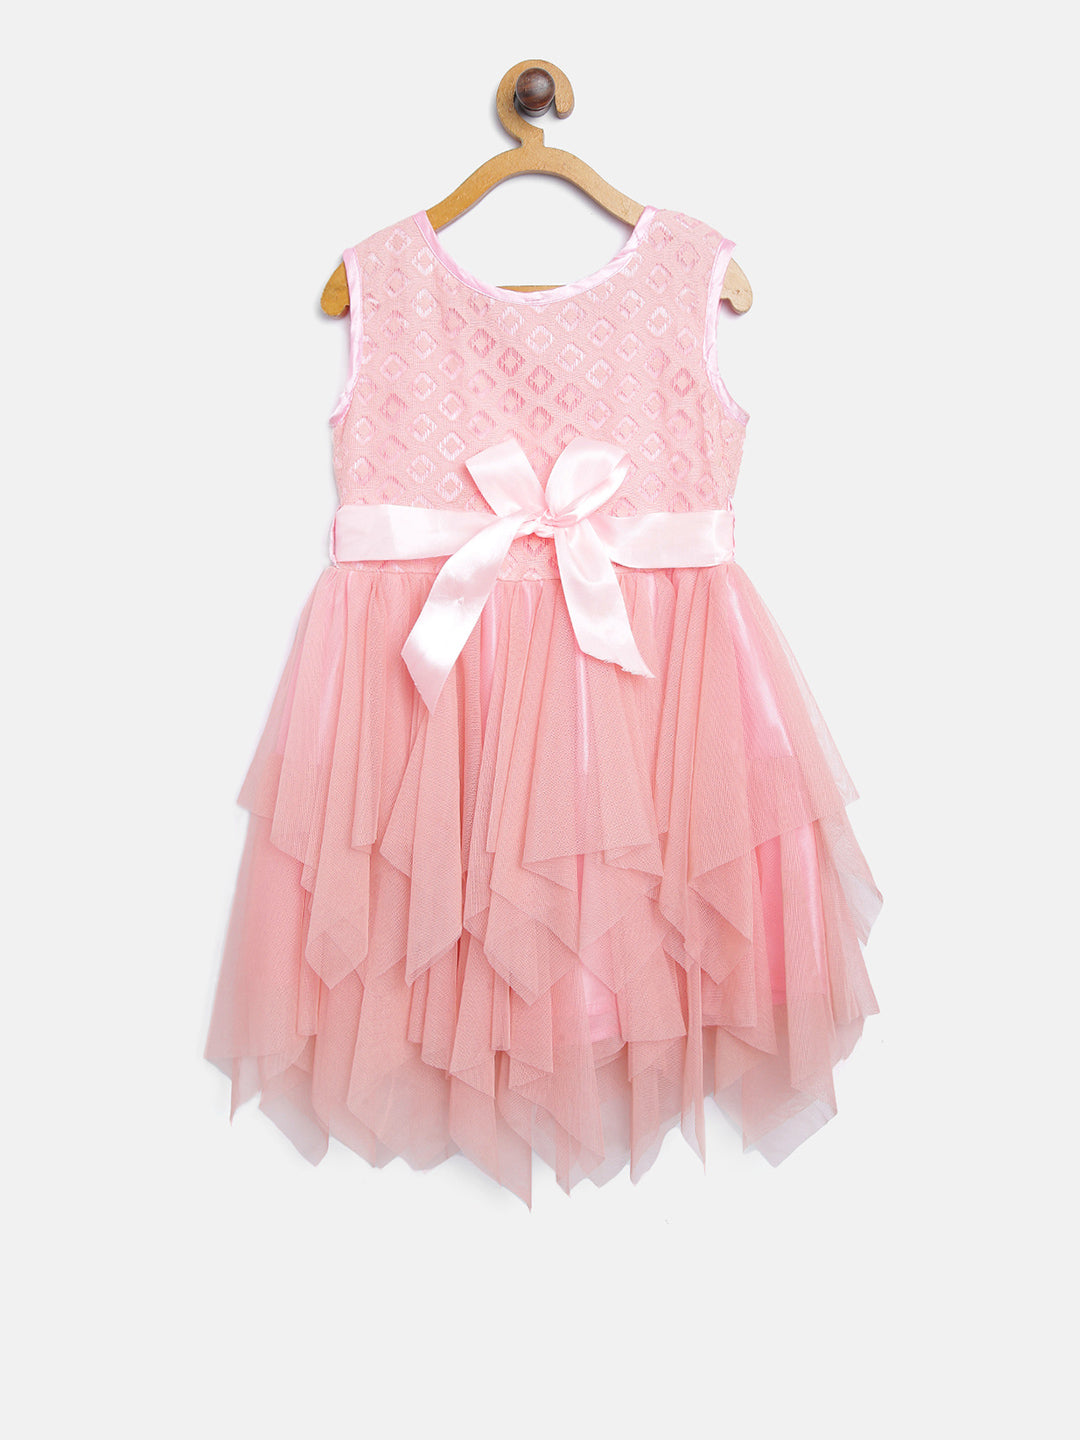 Girls Lace embroidered Asymmetric Hemline Net Pink Party Dress